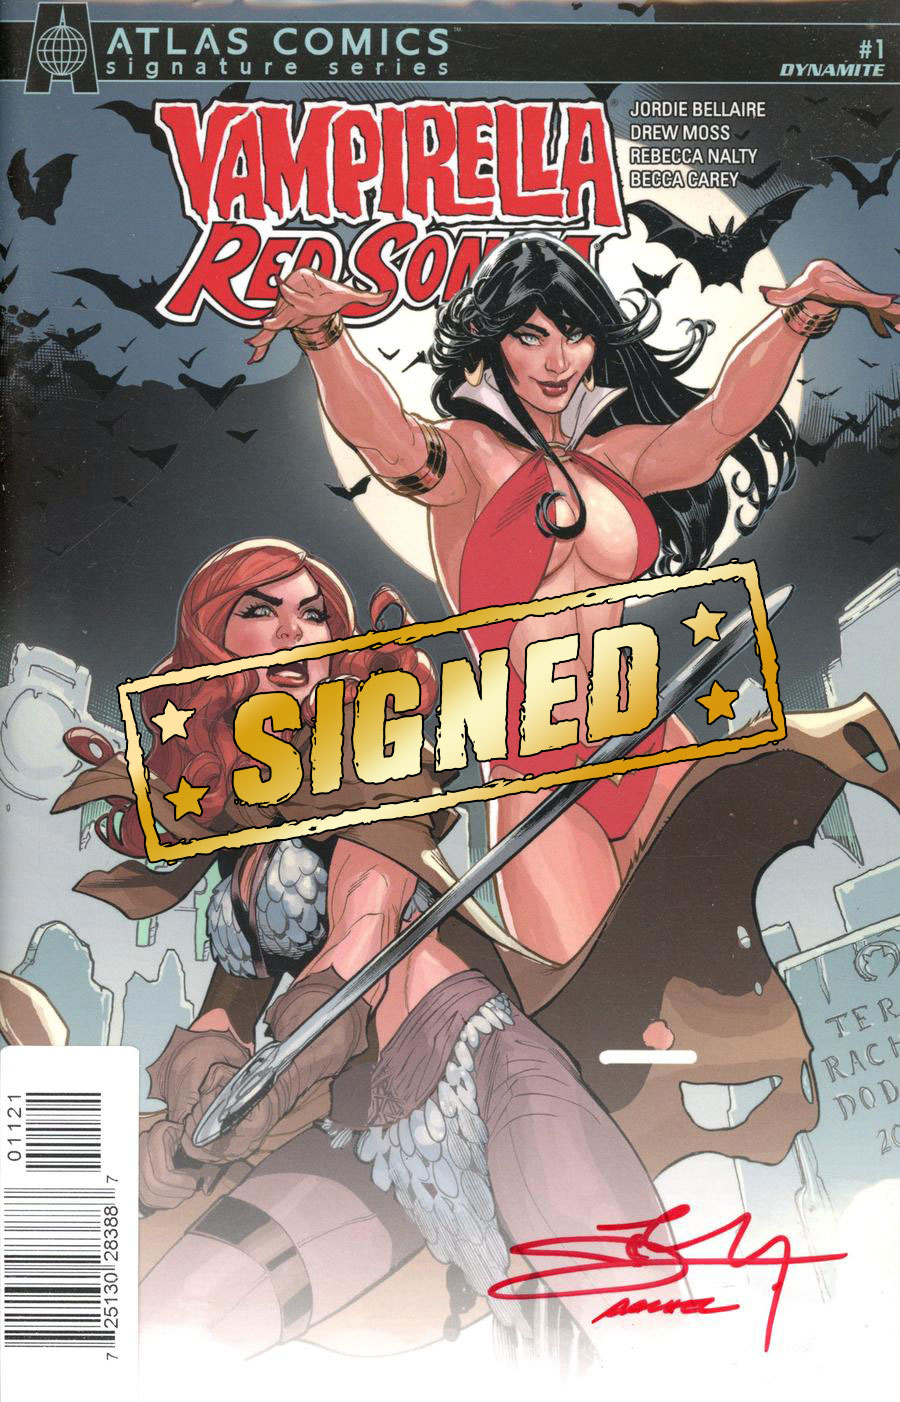 Vampirella Red Sonja #1 Cover O Atlas Comics Signature Series Signed By Terry Dodson & Rachel Dodson